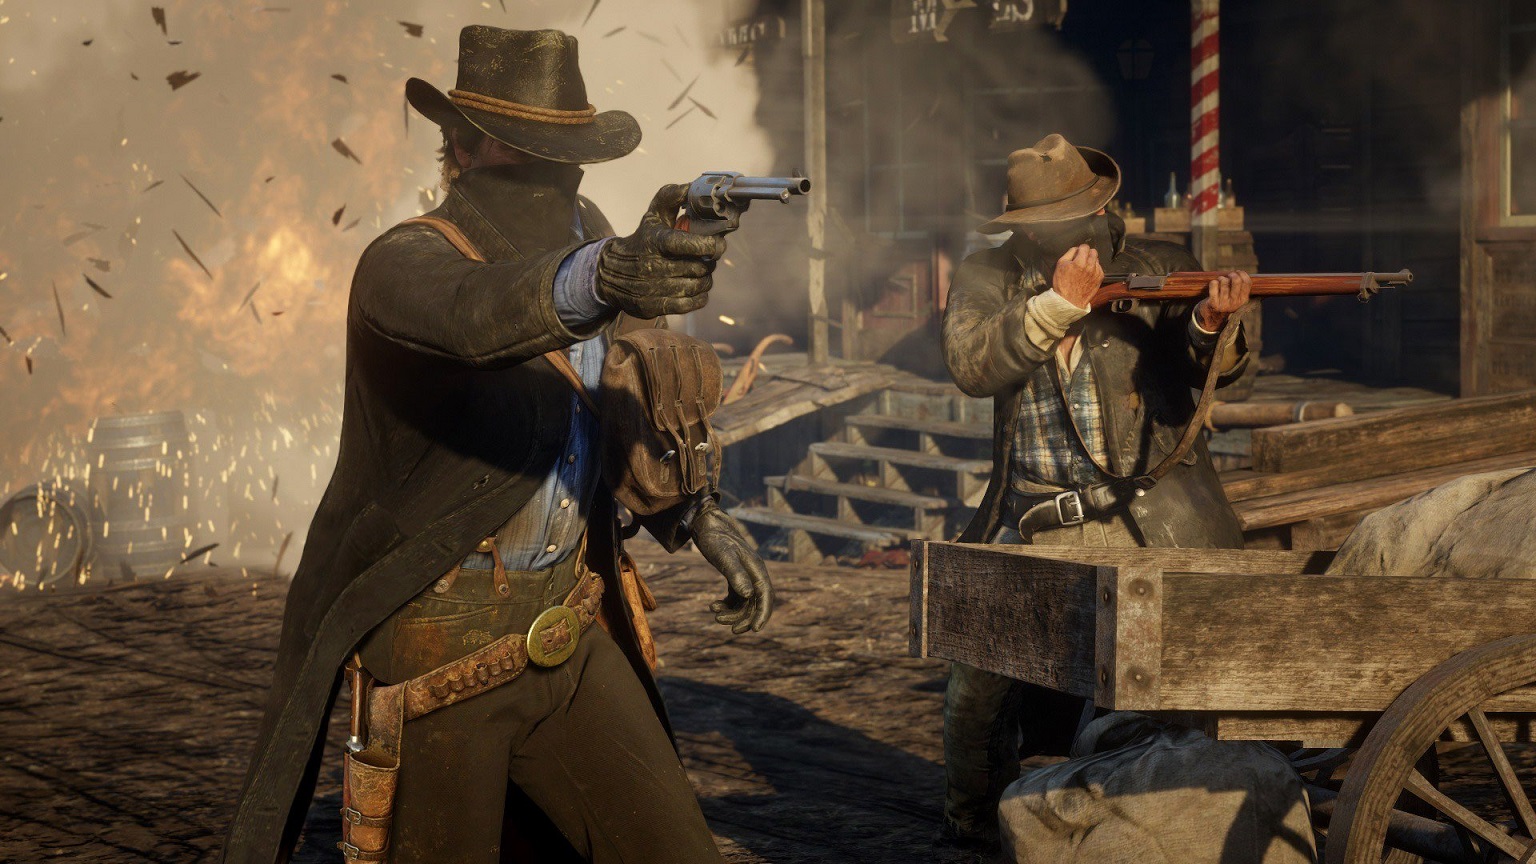 Códigos e cheats de Red Dead Redemption 2 (PS4 e Xbox One) – Tecnoblog